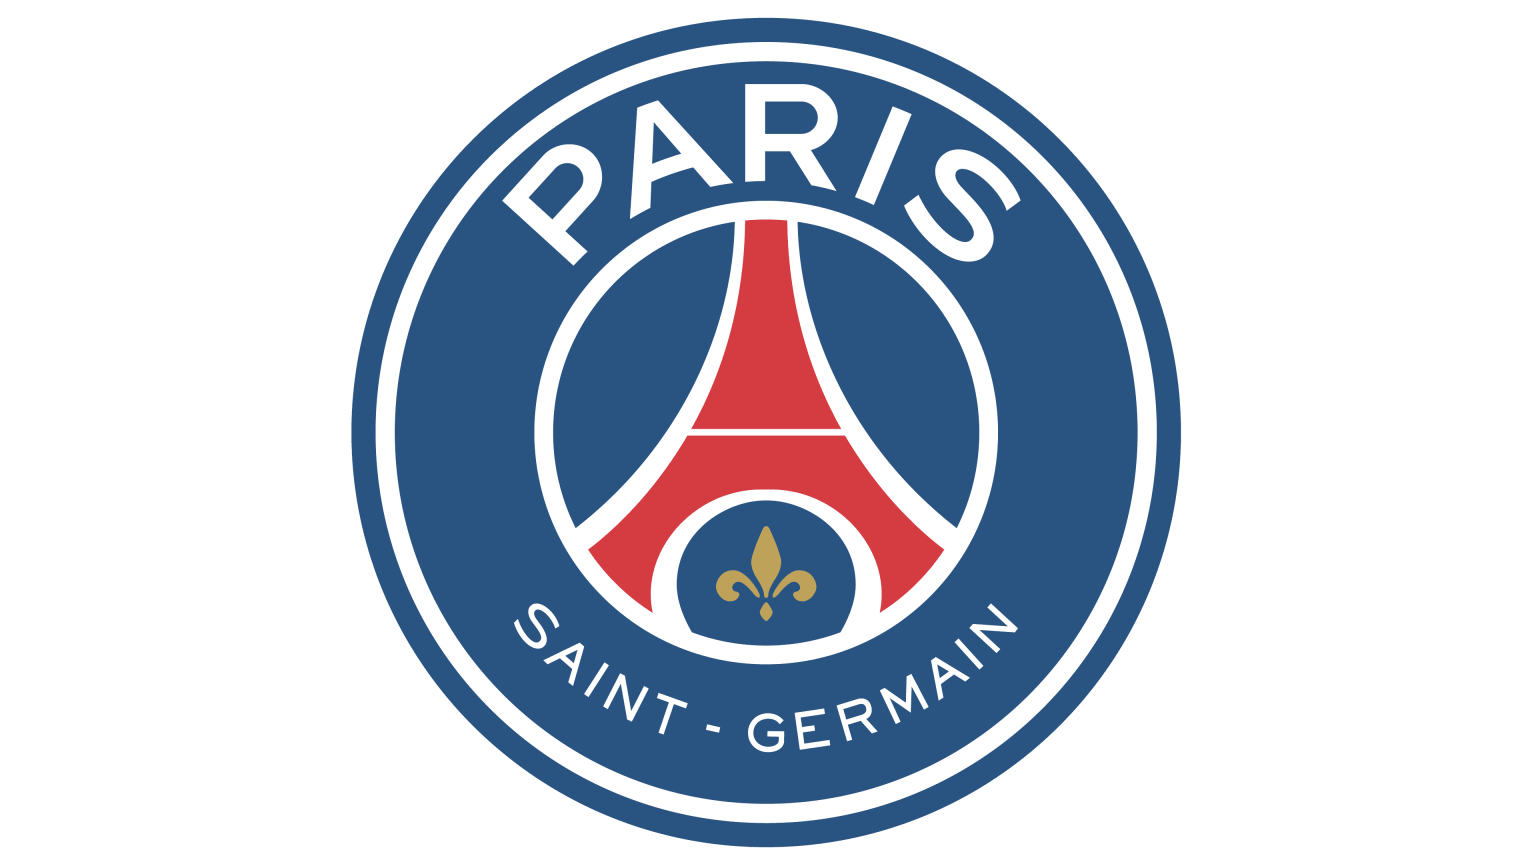 Football Trips Paris Saint Germain